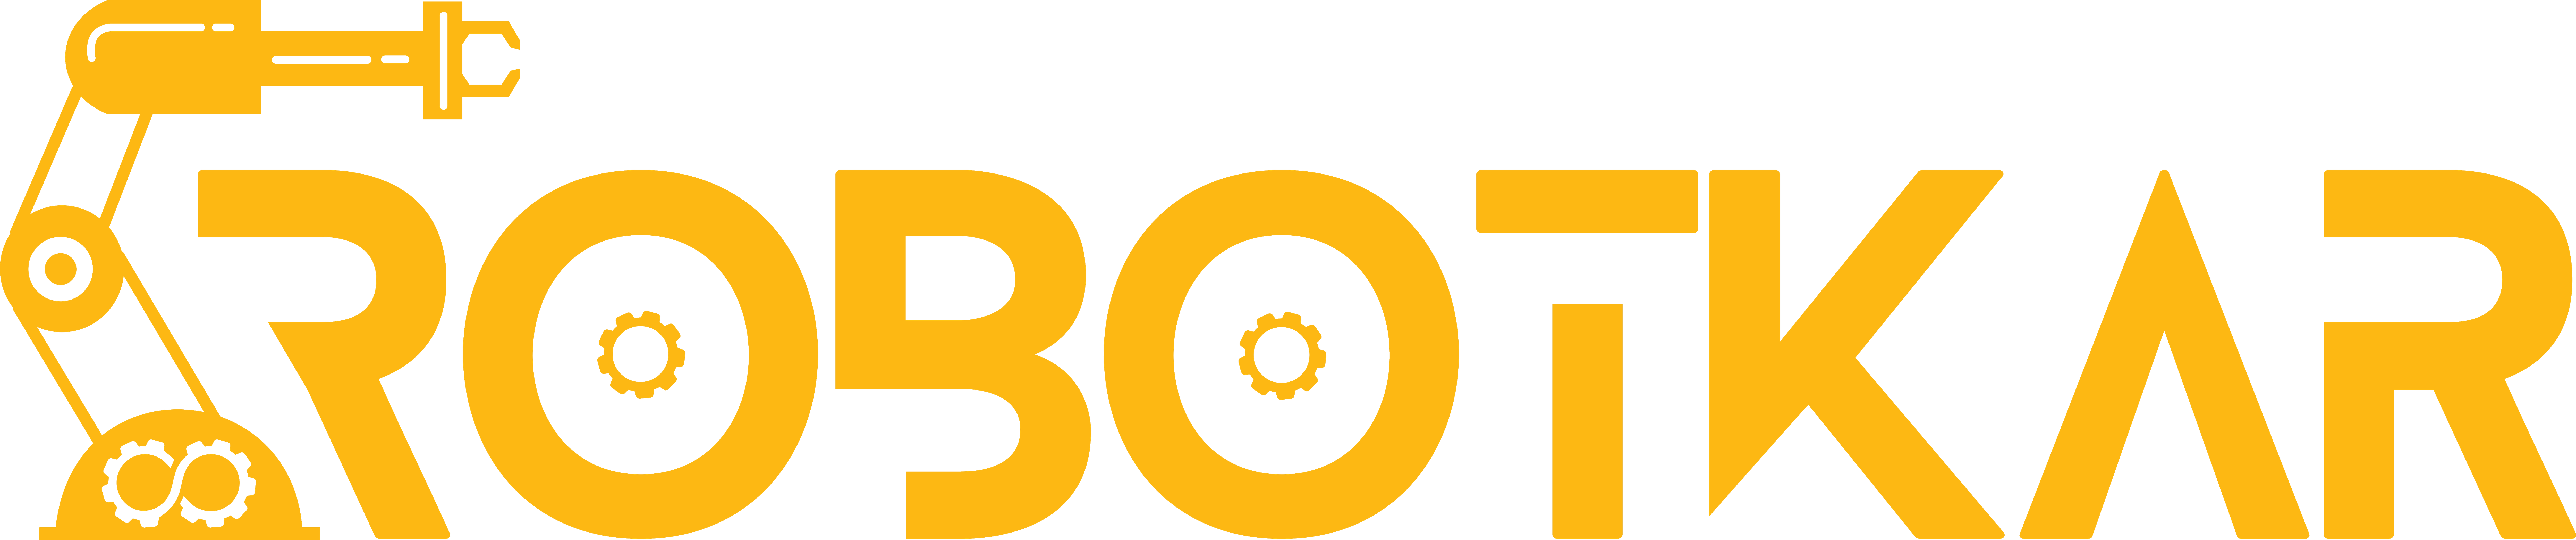 RoboTkar.:ربات کار